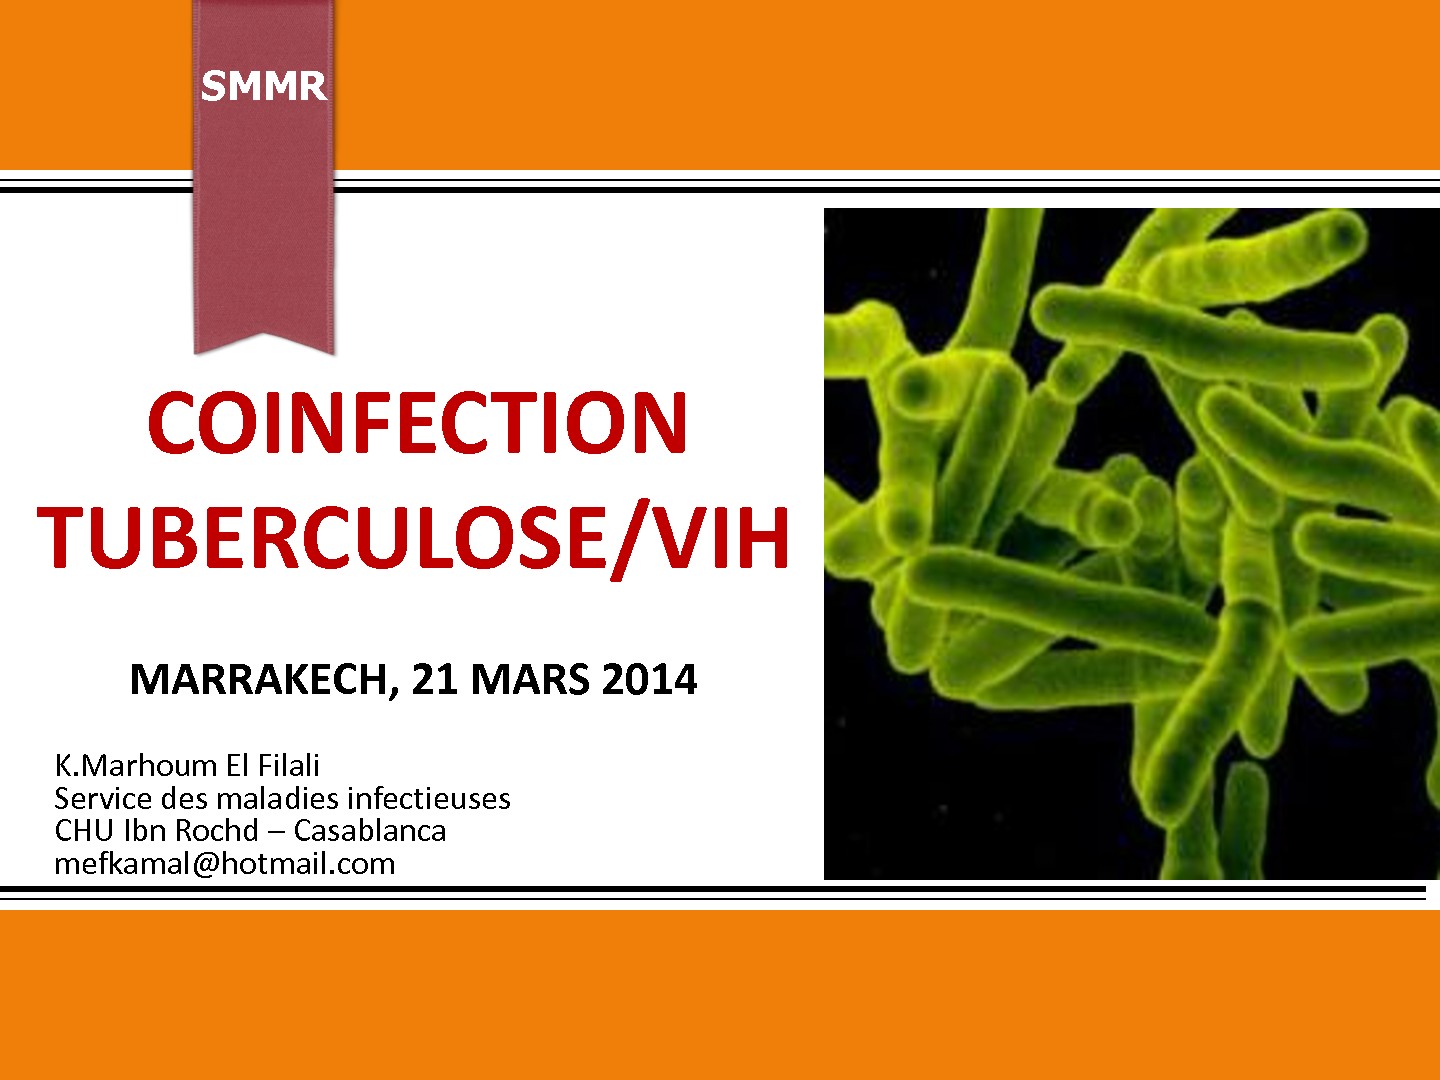 Coinfection Tuberculose VIH. K. Marhoum El Filali